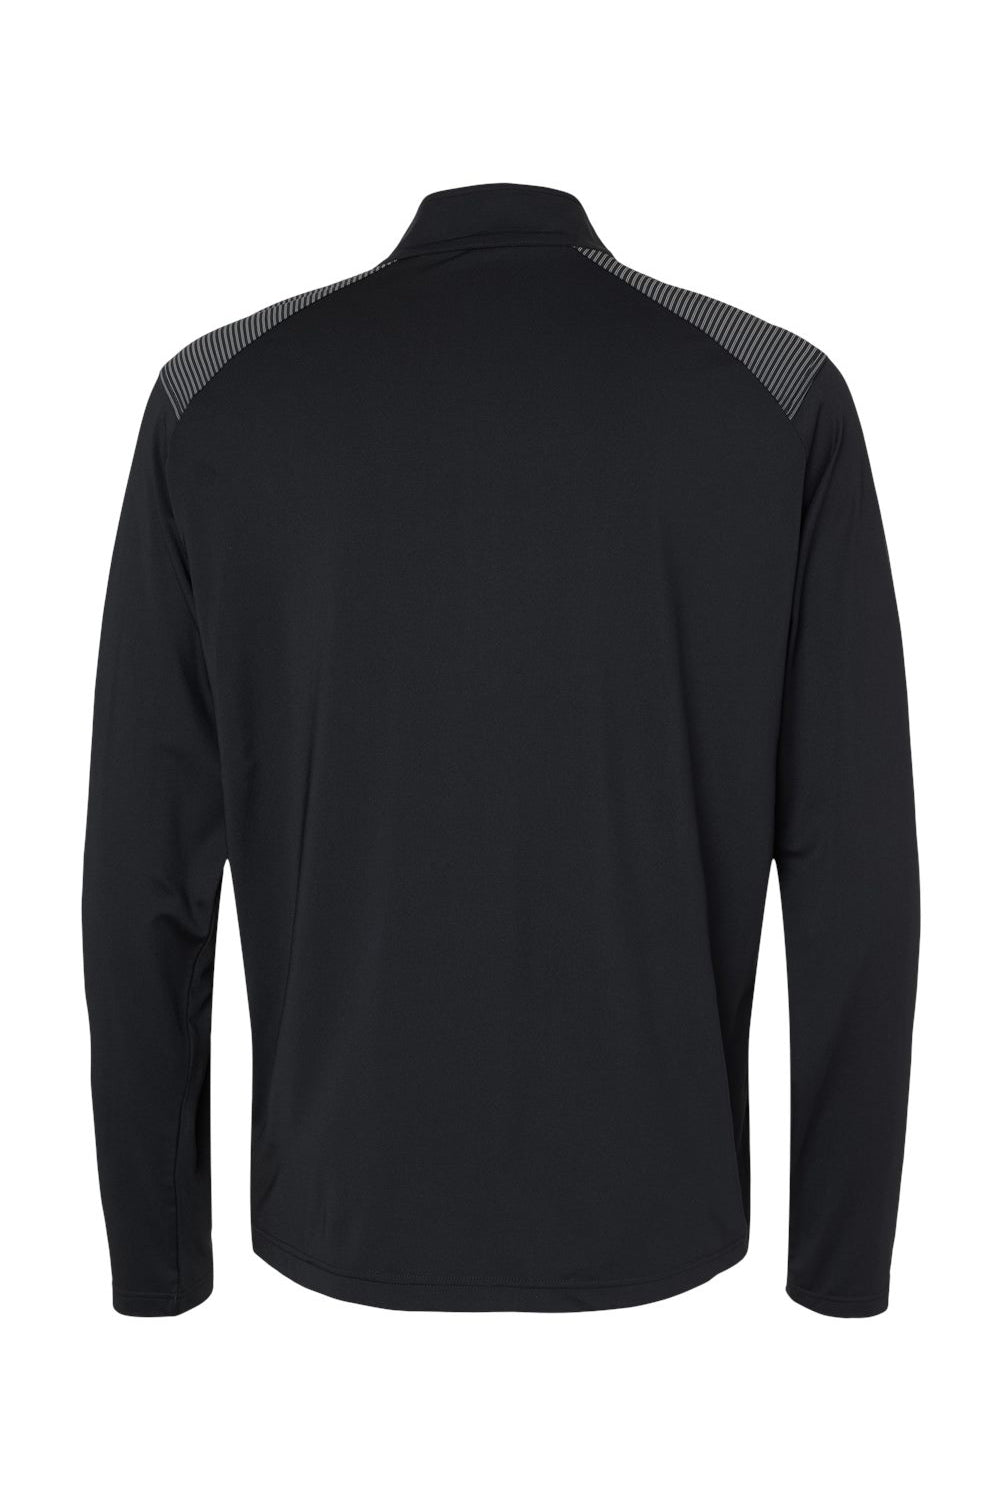 Adidas A520 Mens Shoulder Stripe Moisture Wicking 1/4 Zip Sweatshirt Black Flat Back